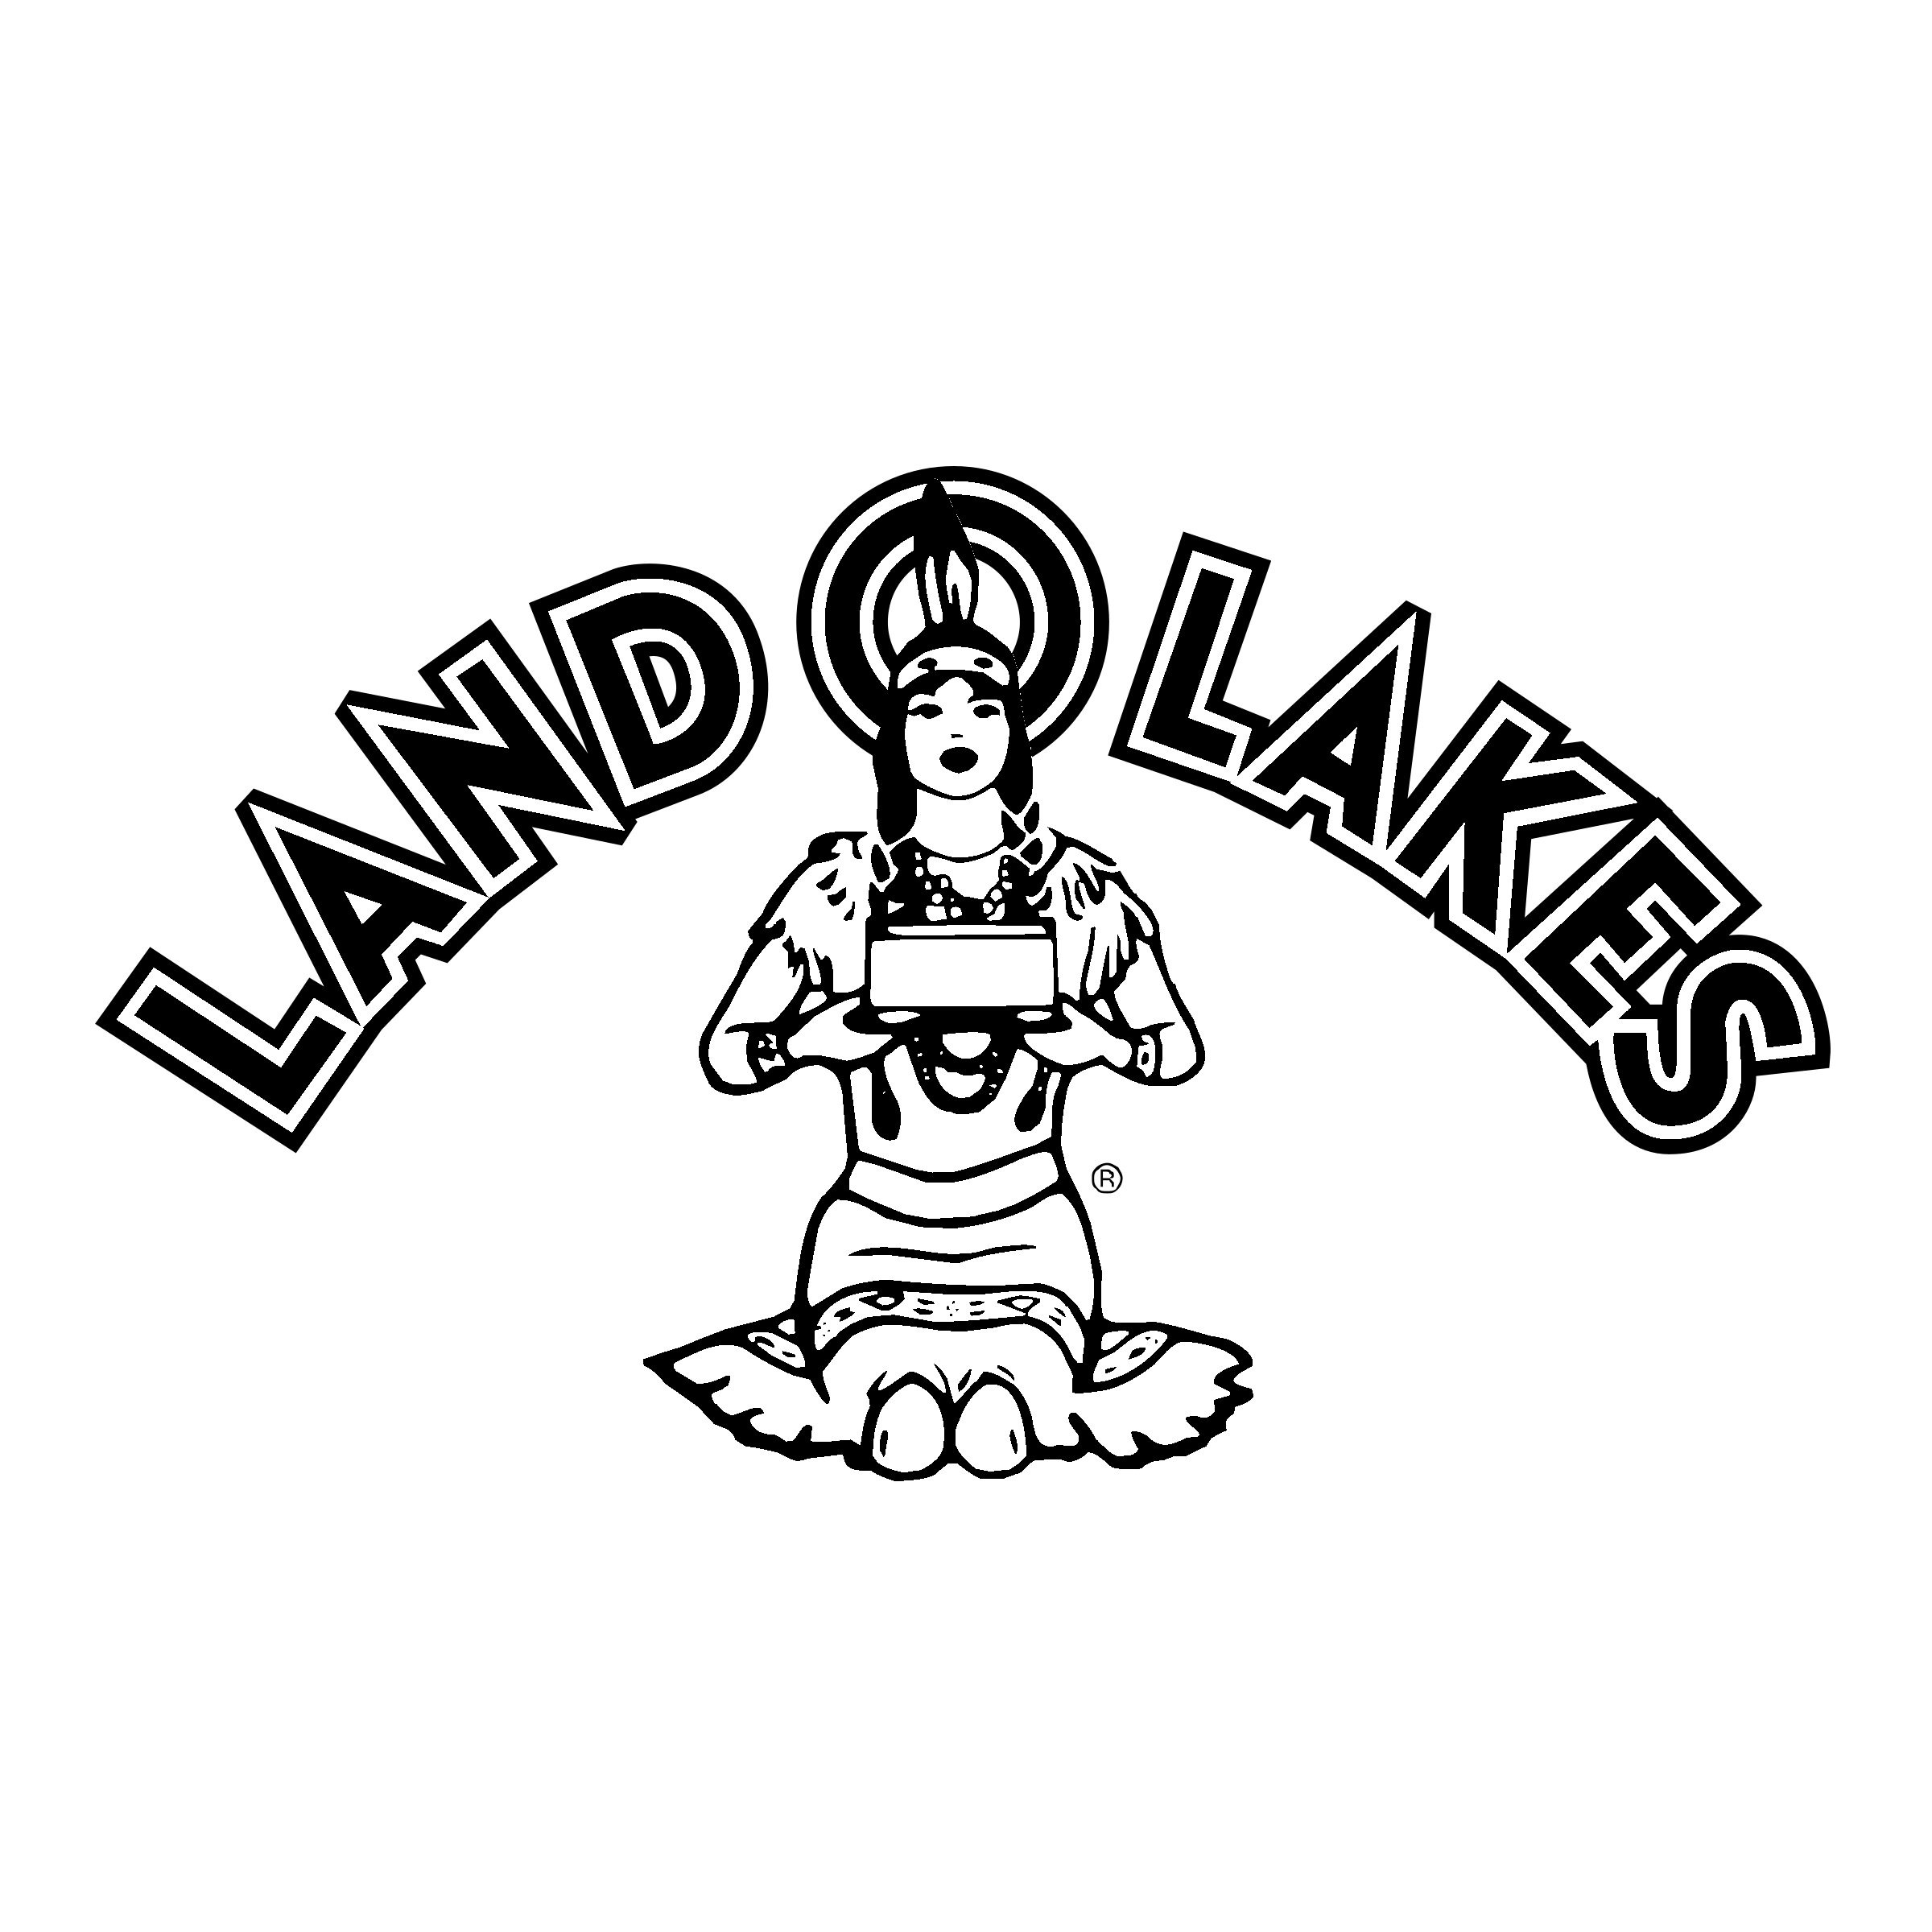 land-o-lakes-logo-black-and-white.png